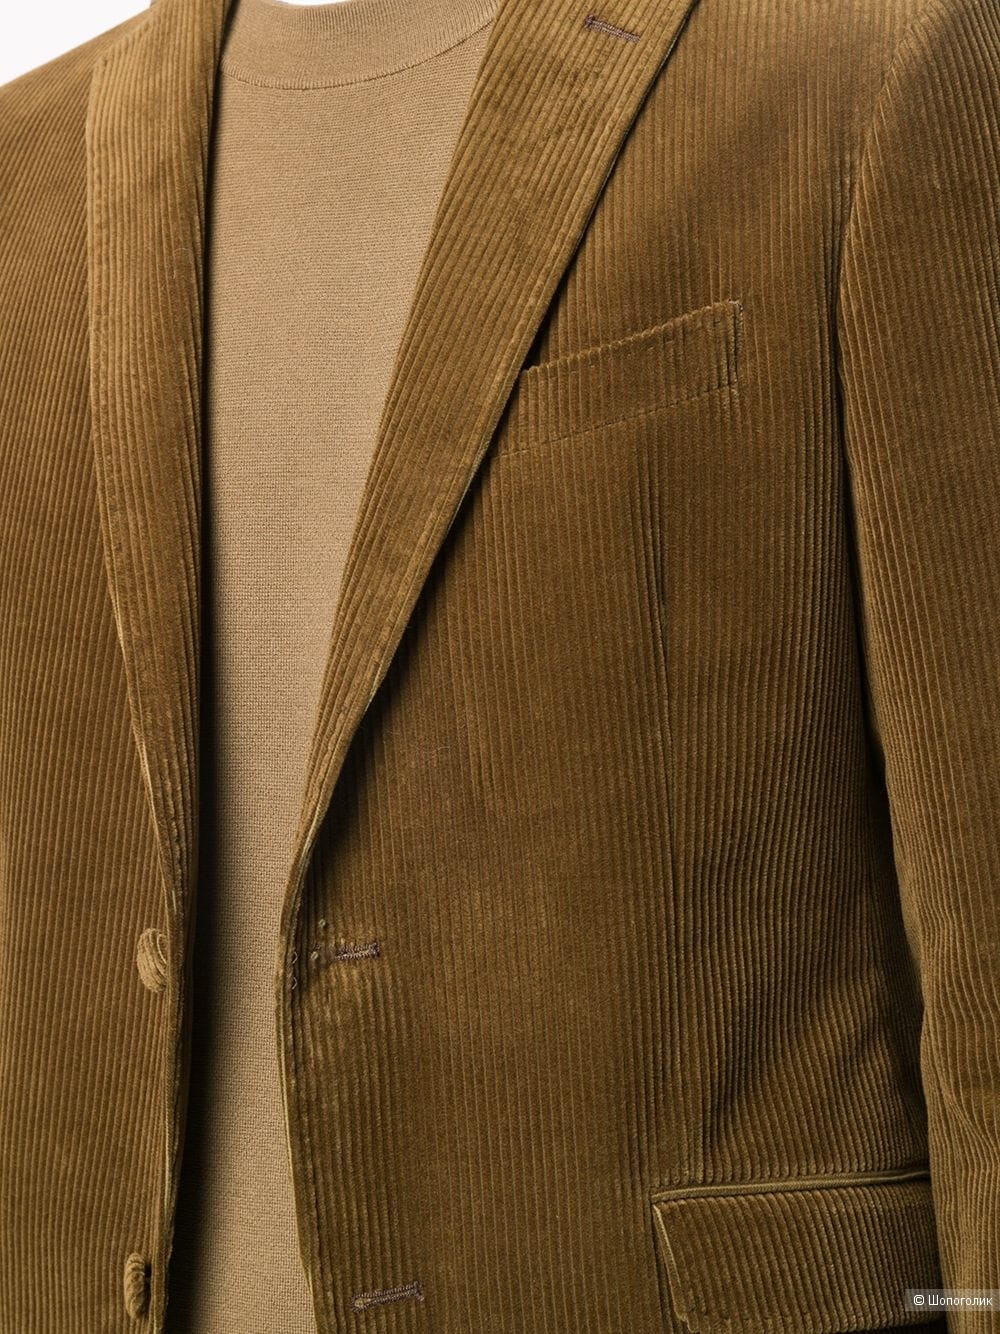 Пиджак I velluti pontoglio tailor&son,50-52